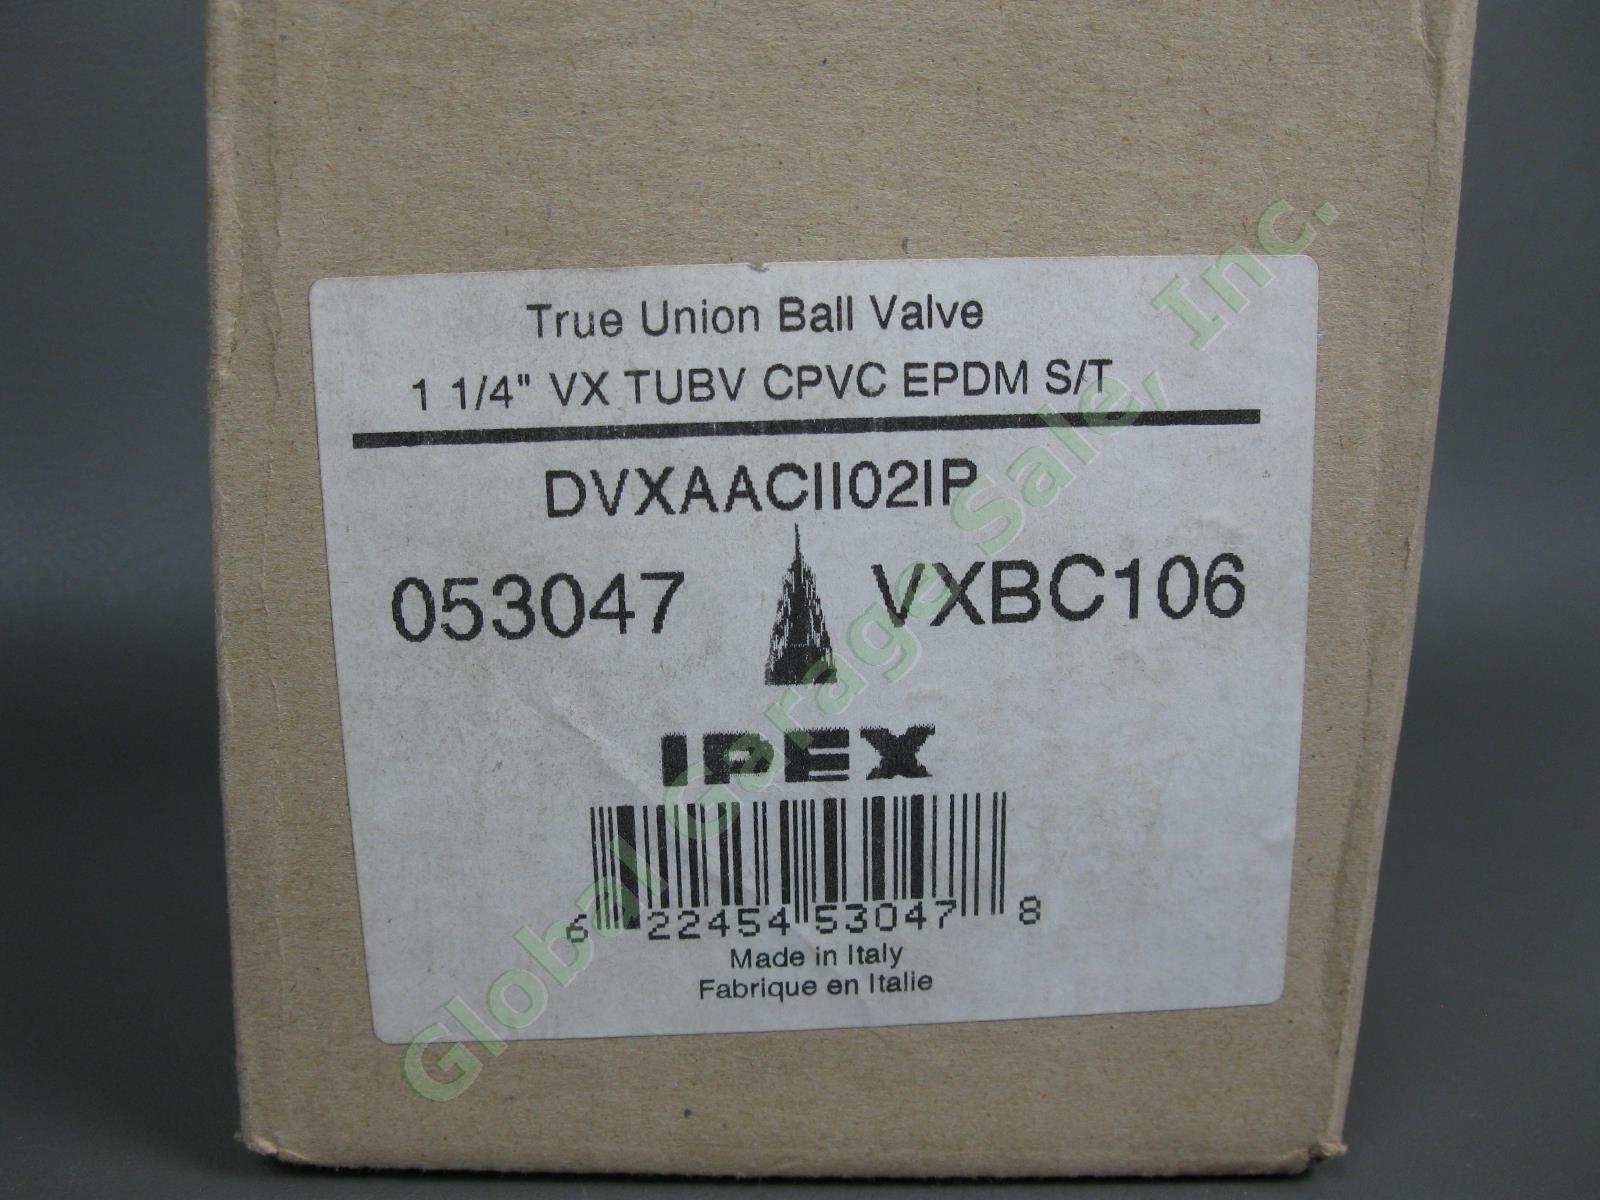 3 NEW Sealed Ipex 1-1/4" VXBC106 True Union Ball Valve VX TUBV CPVC EPDM PVC Set 1